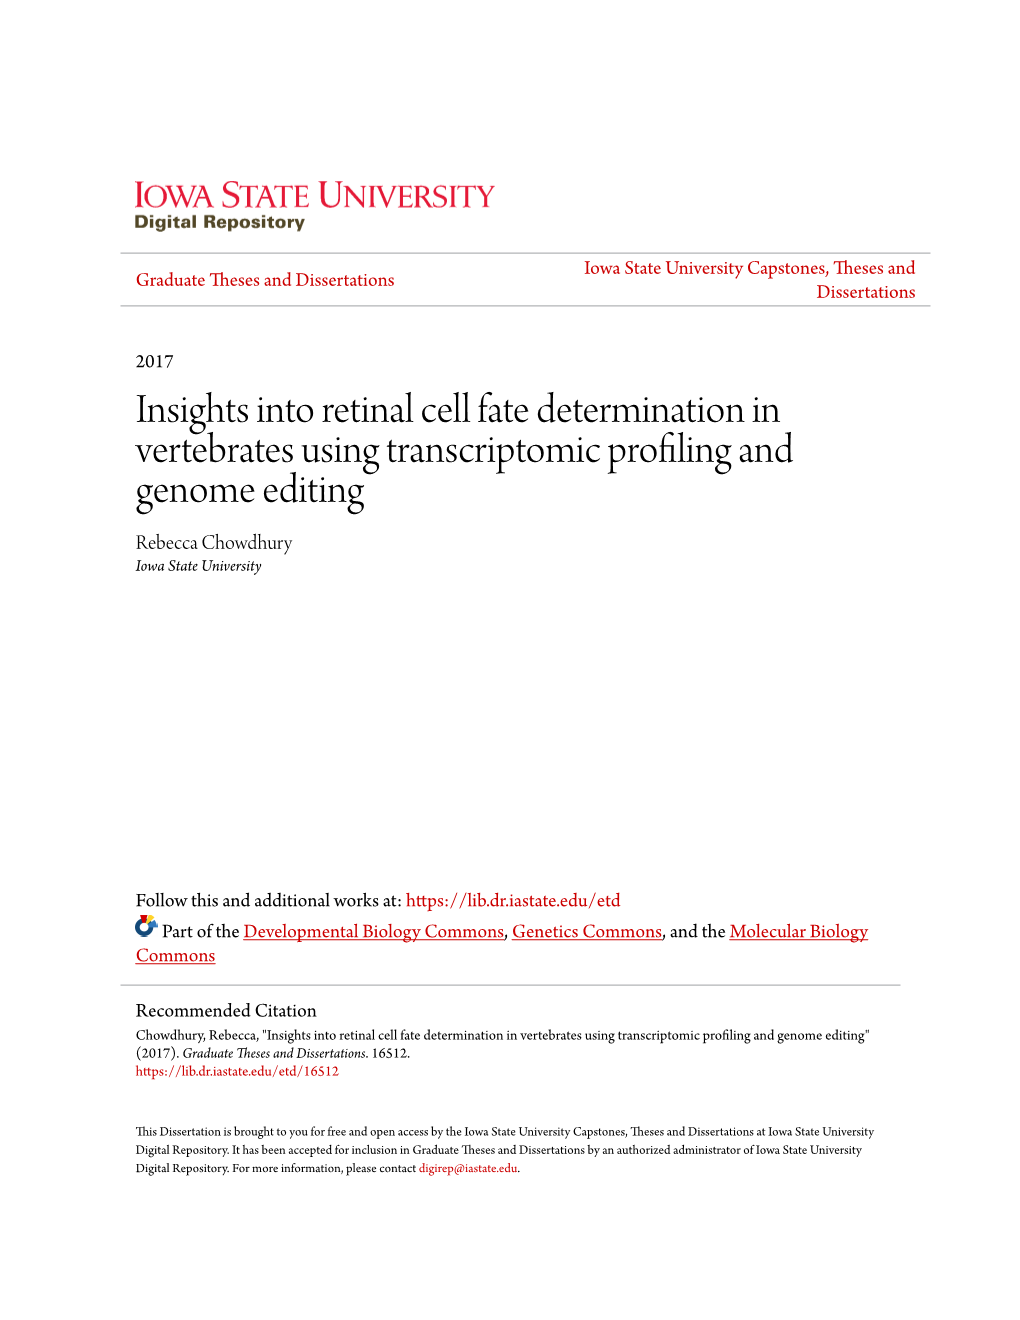 Insights Into Retinal Cell Fate Determination in Vertebrates Using Transcriptomic Profiling and Genome Editing Rebecca Chowdhury Iowa State University